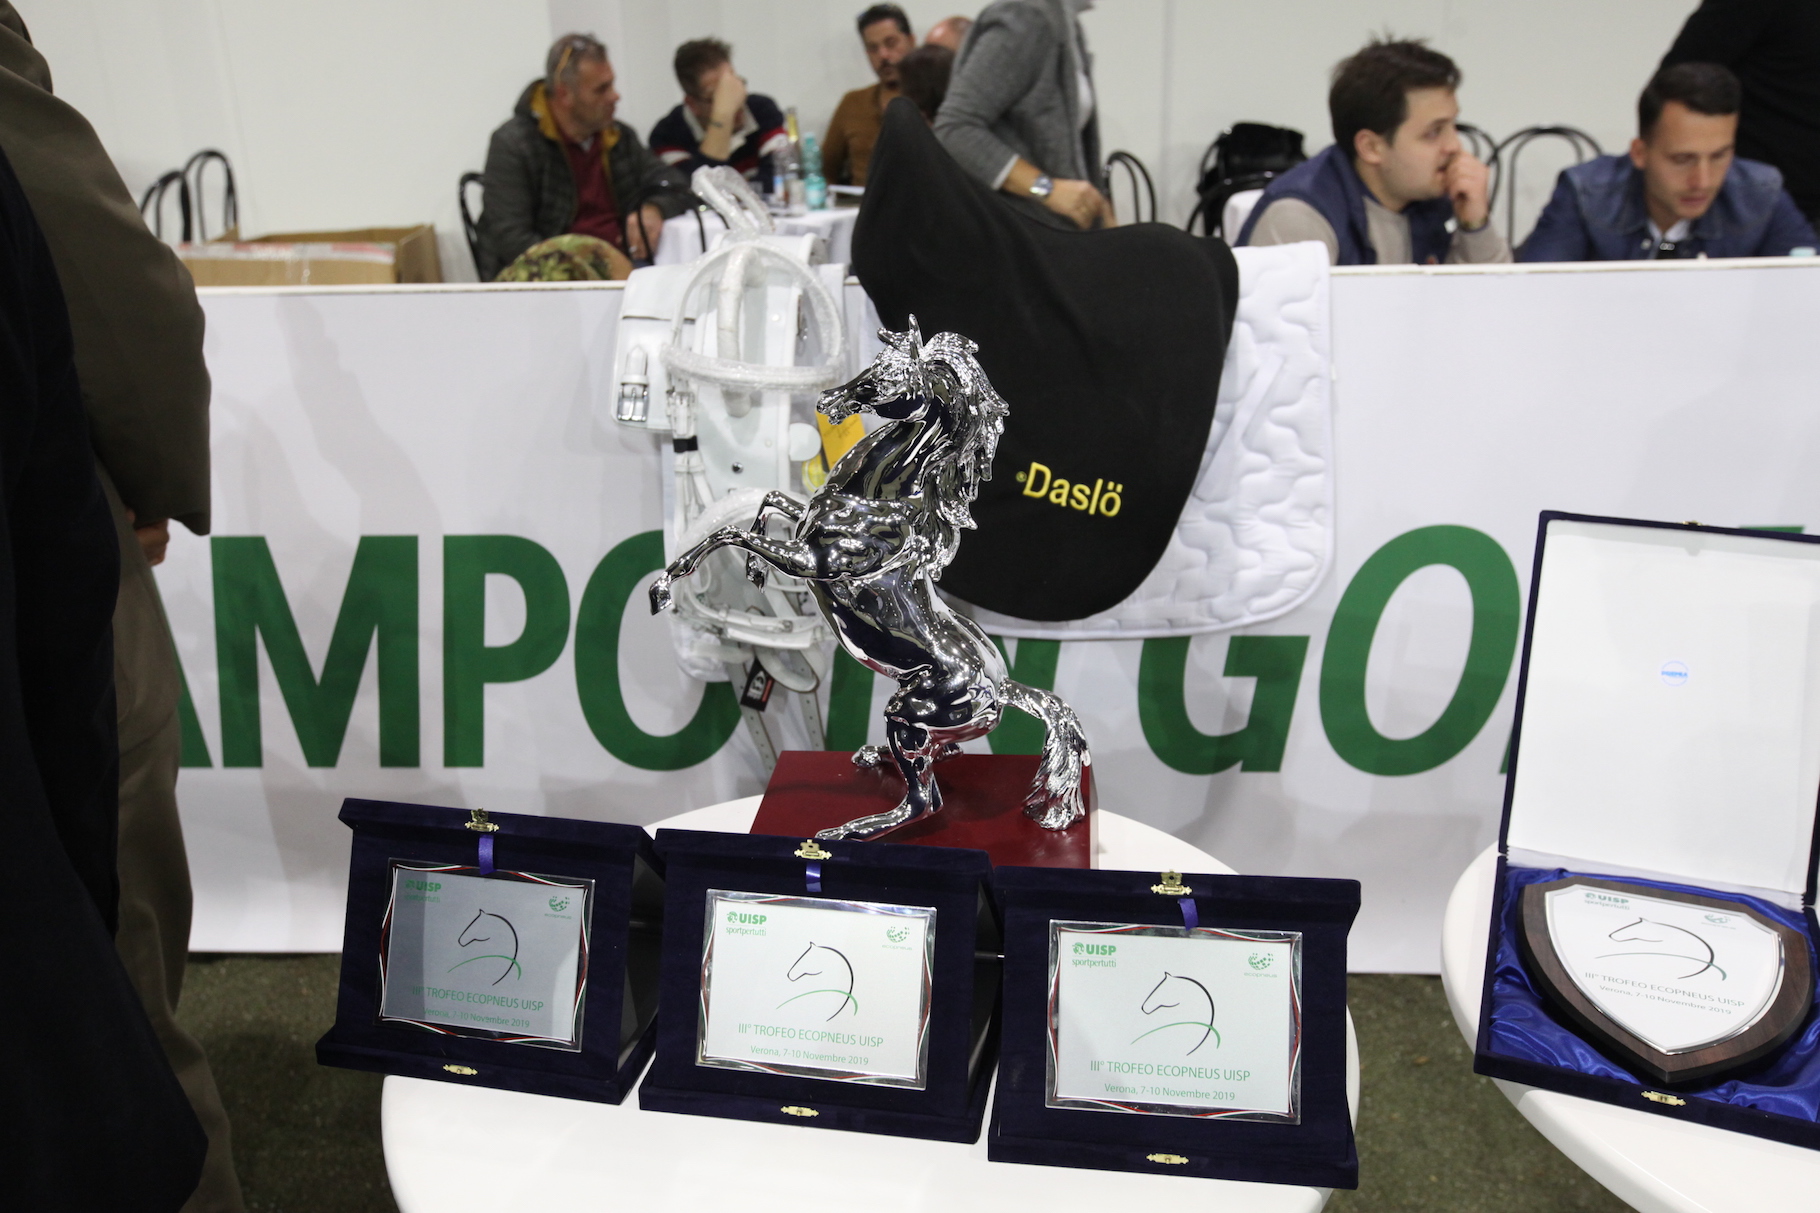 Premiazione Trofeo Ecopneus-Uisp